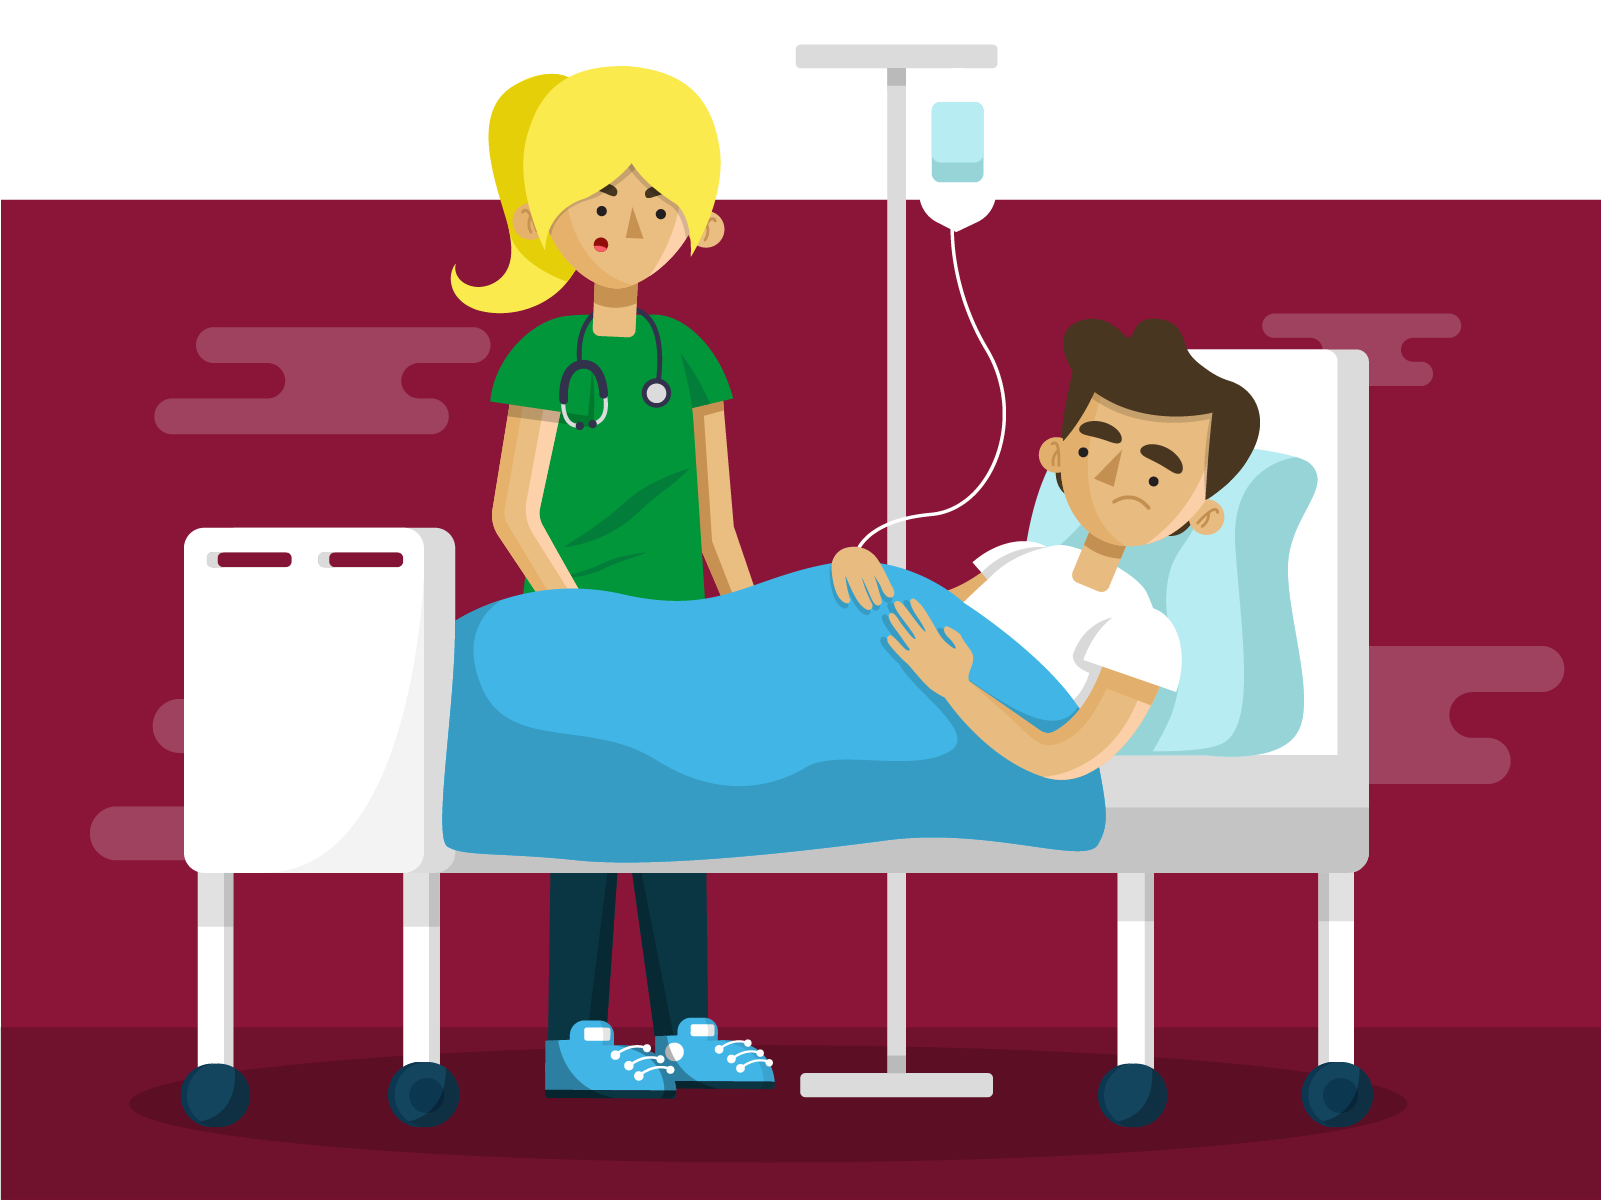 Patient in bed receiving care